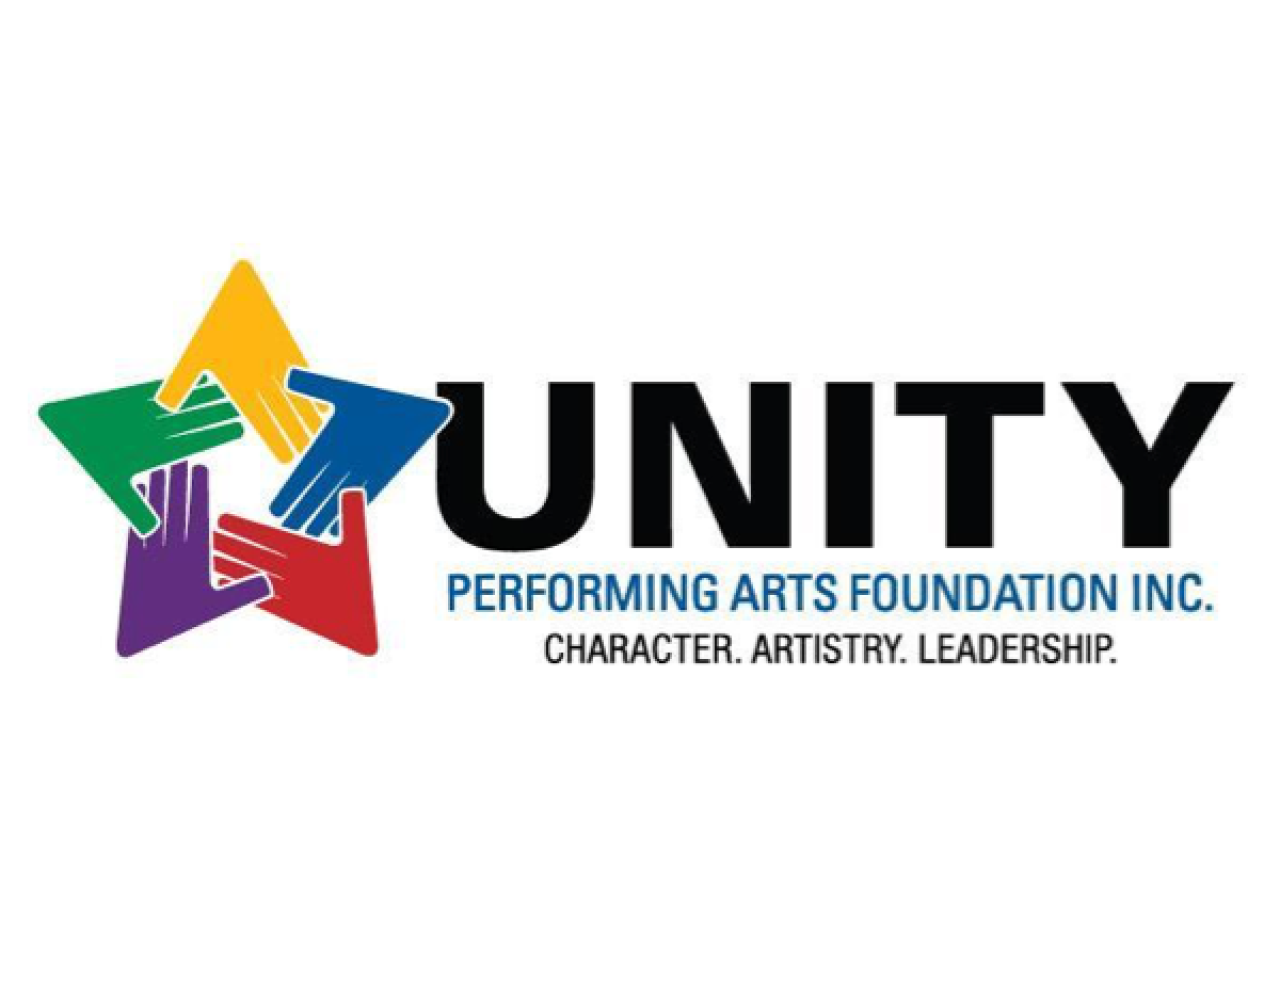 unity performing arts foundation logo.